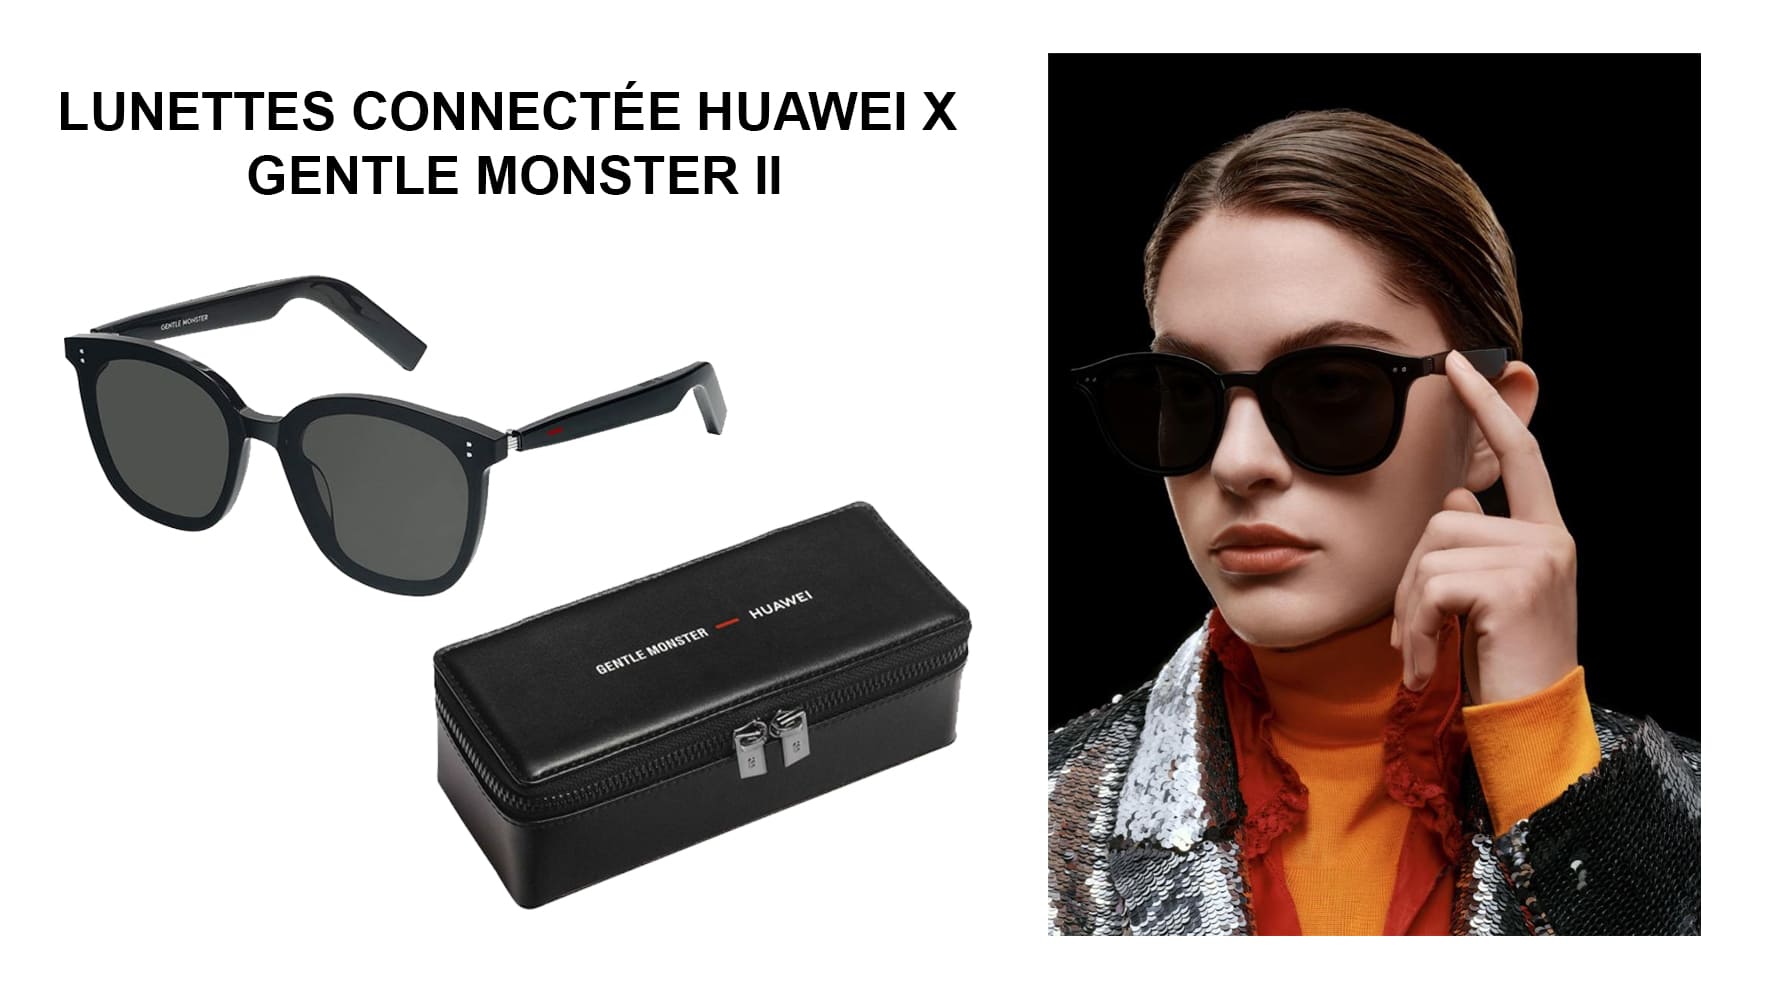 Lunettes Connectée Huawei X Gentle Monster II bas prix en Tunisie